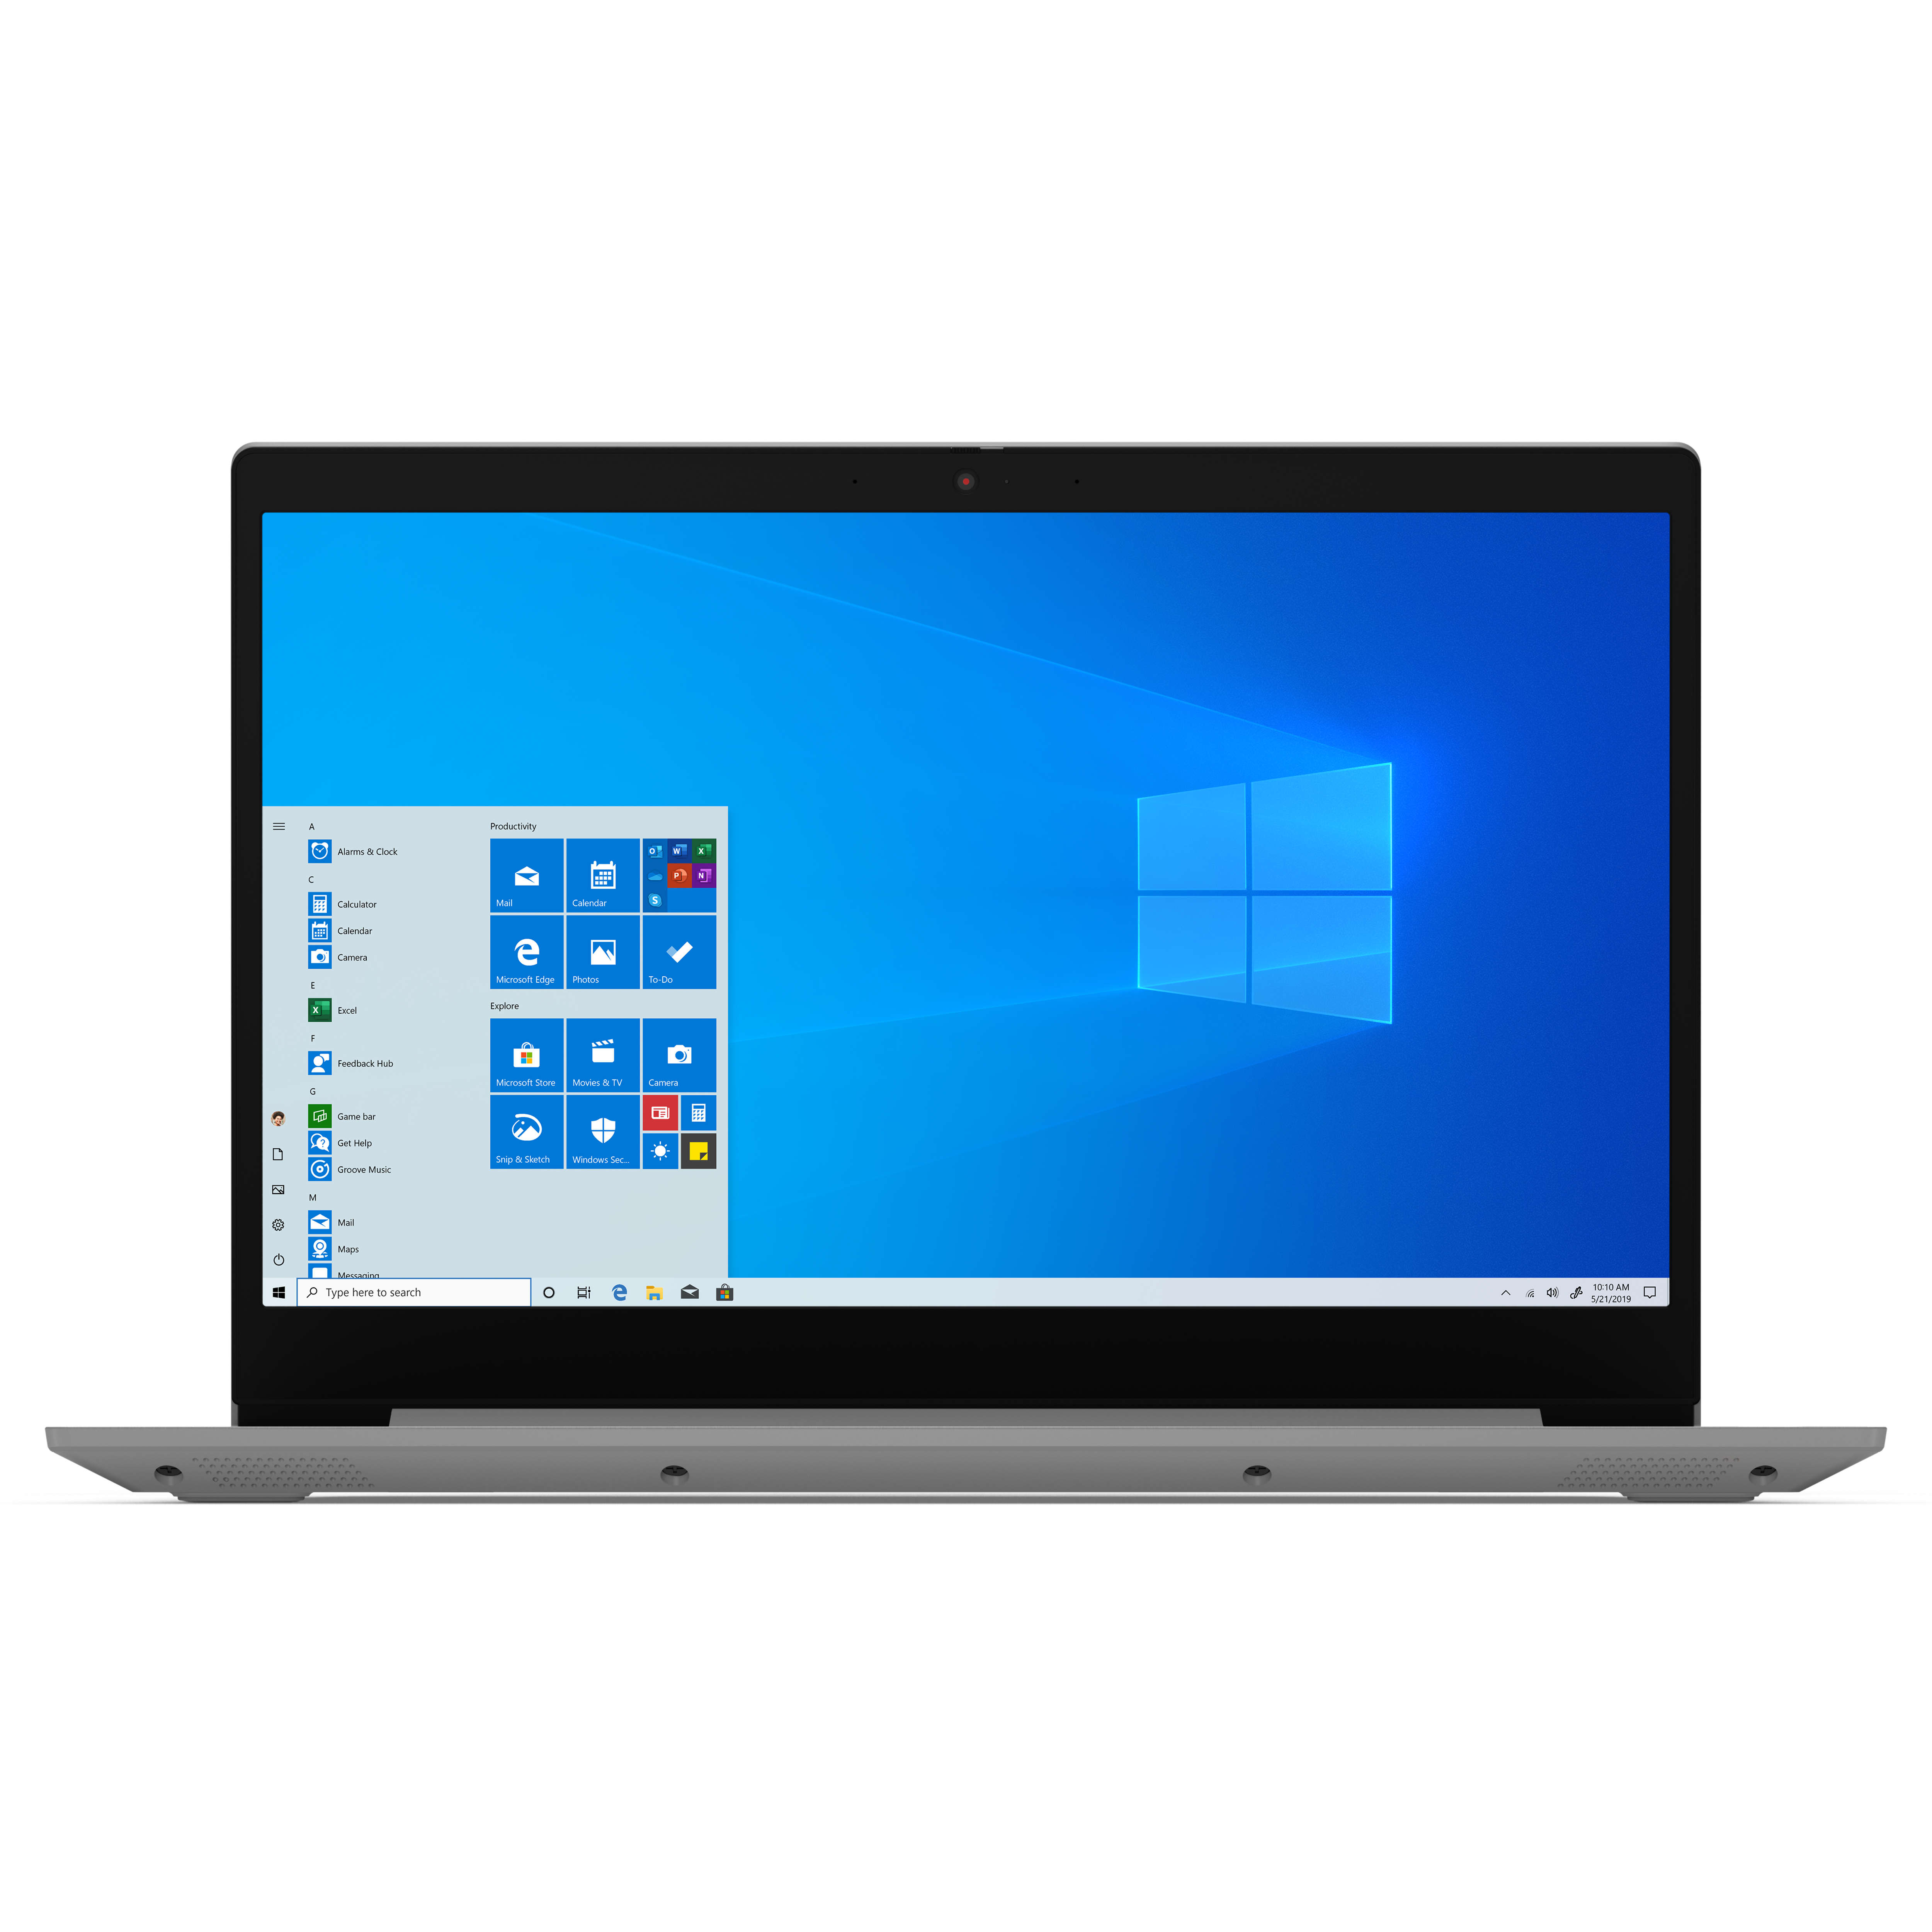 Lenovo Ideapad 3i 15.6" FHD PC Laptop, Intel Core i3-1115G4, 4GB, 128GB SSD, Platinum Grey, Windows 10 in S Mode, 81X8007EUS - image 1 of 14